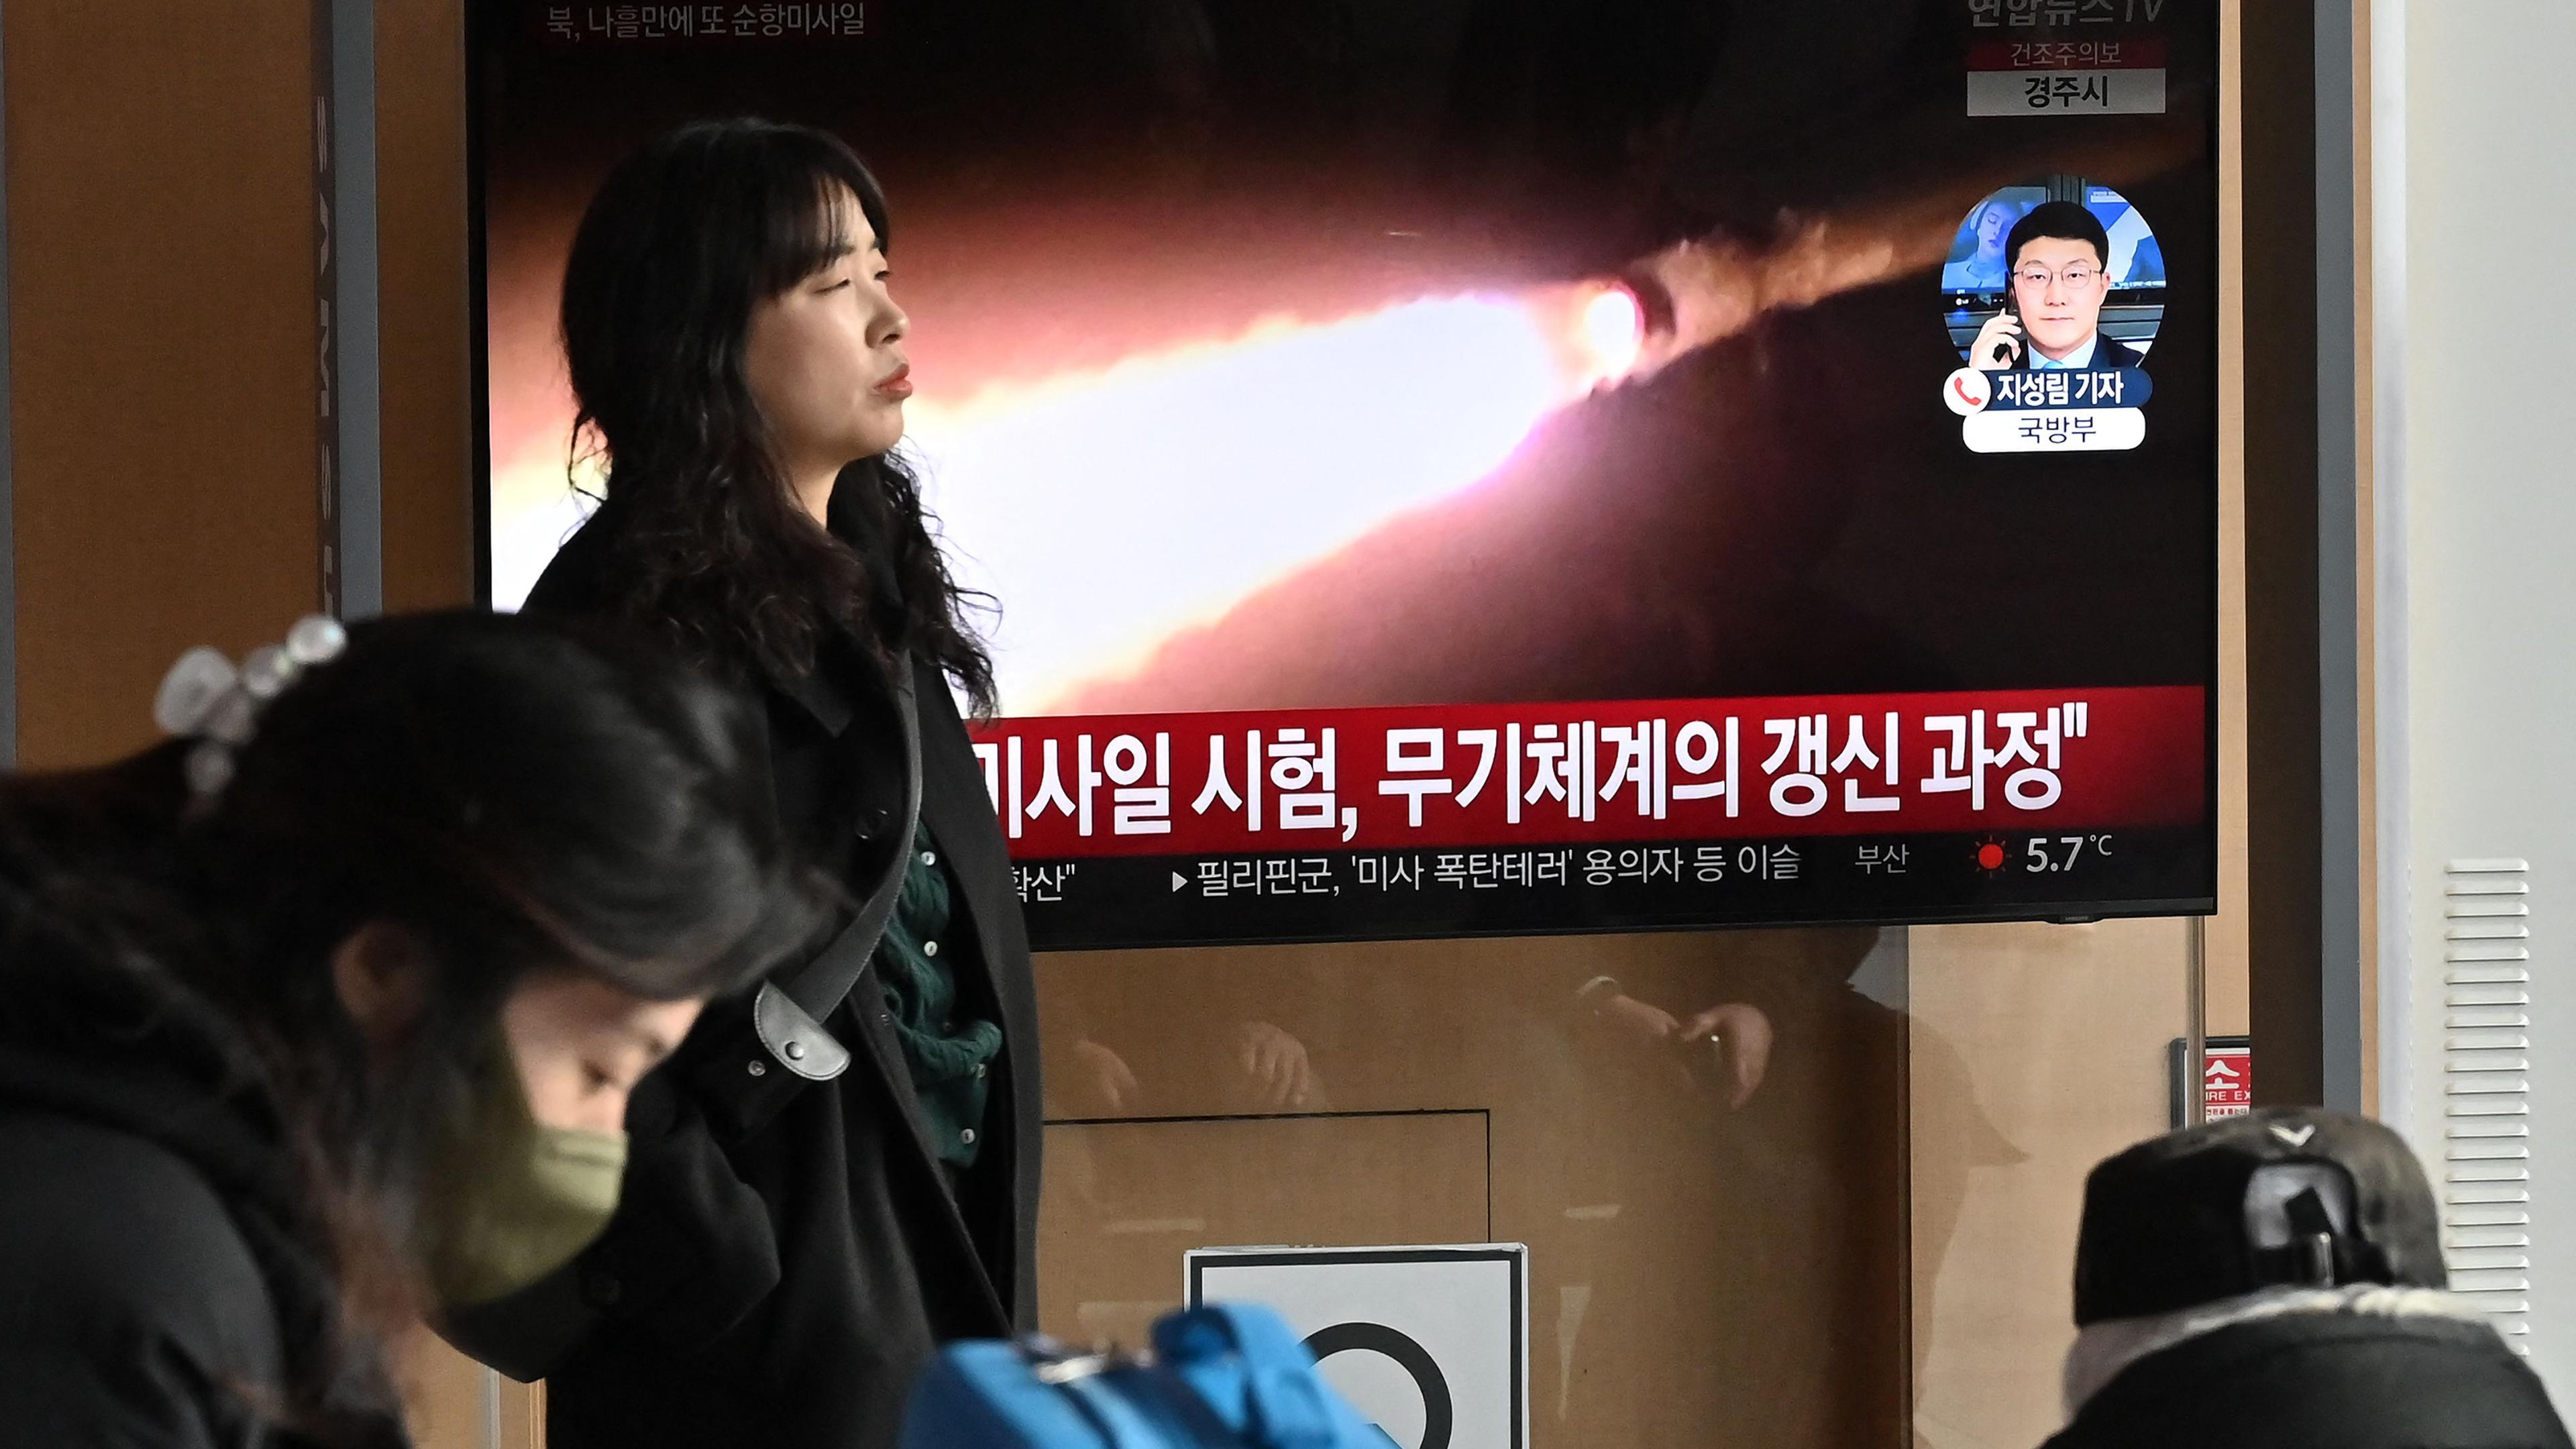 Bahnhof in Seoul: Das südkoreanische TV berichtet über nordkoreanische Raketentests